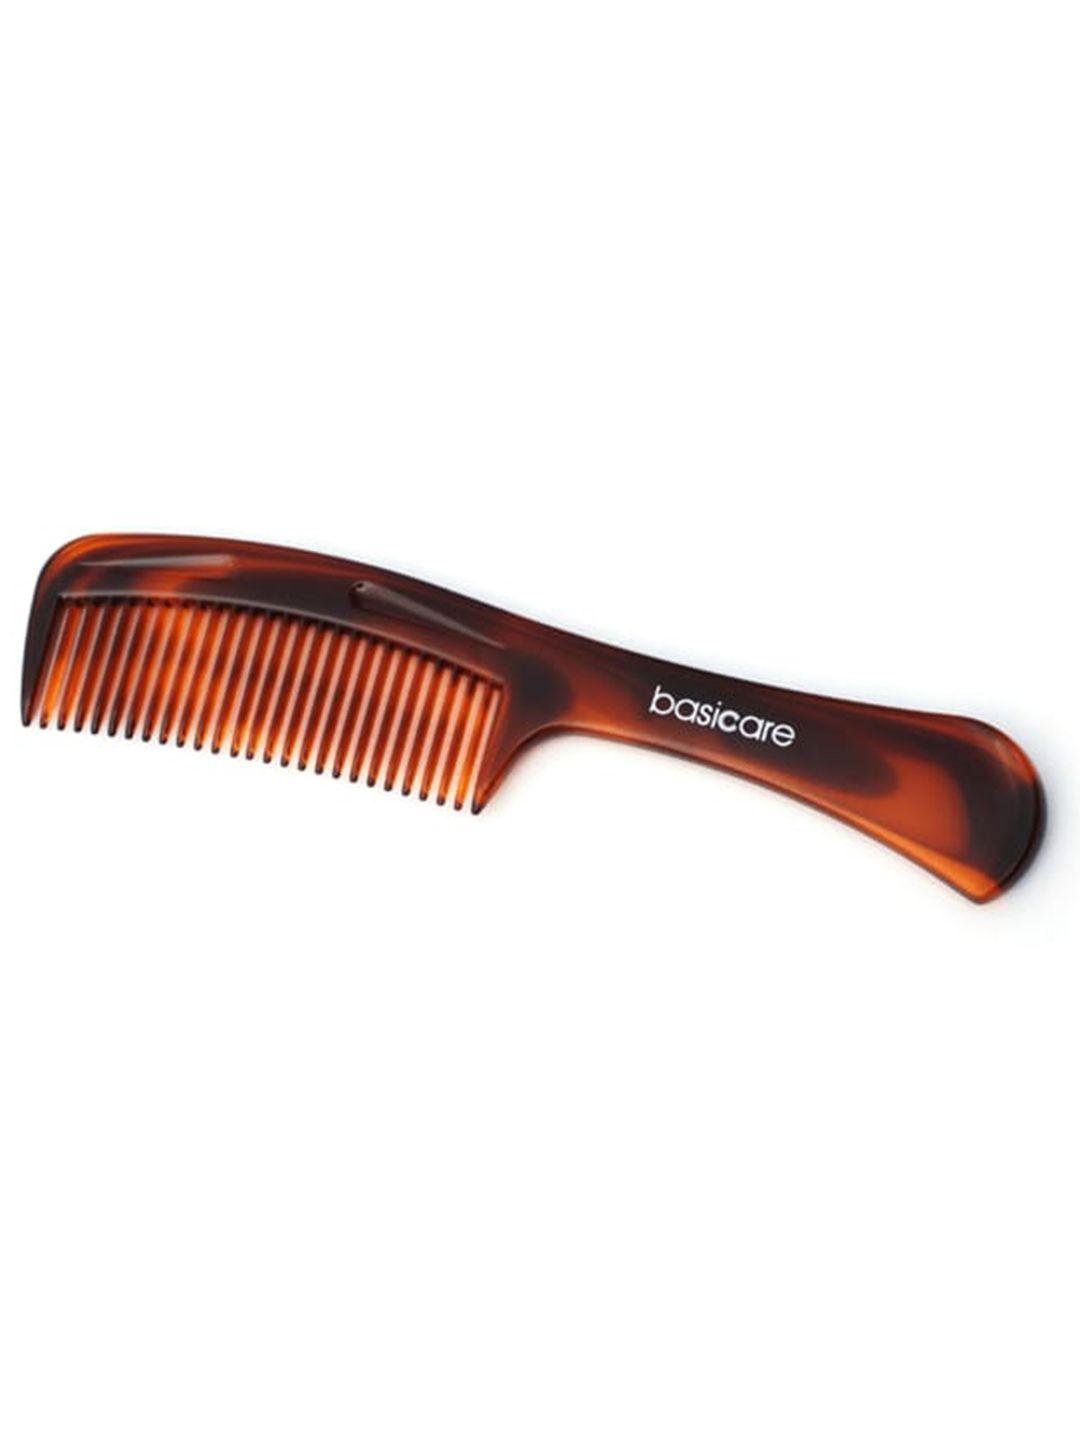 basicare brown static free super comb